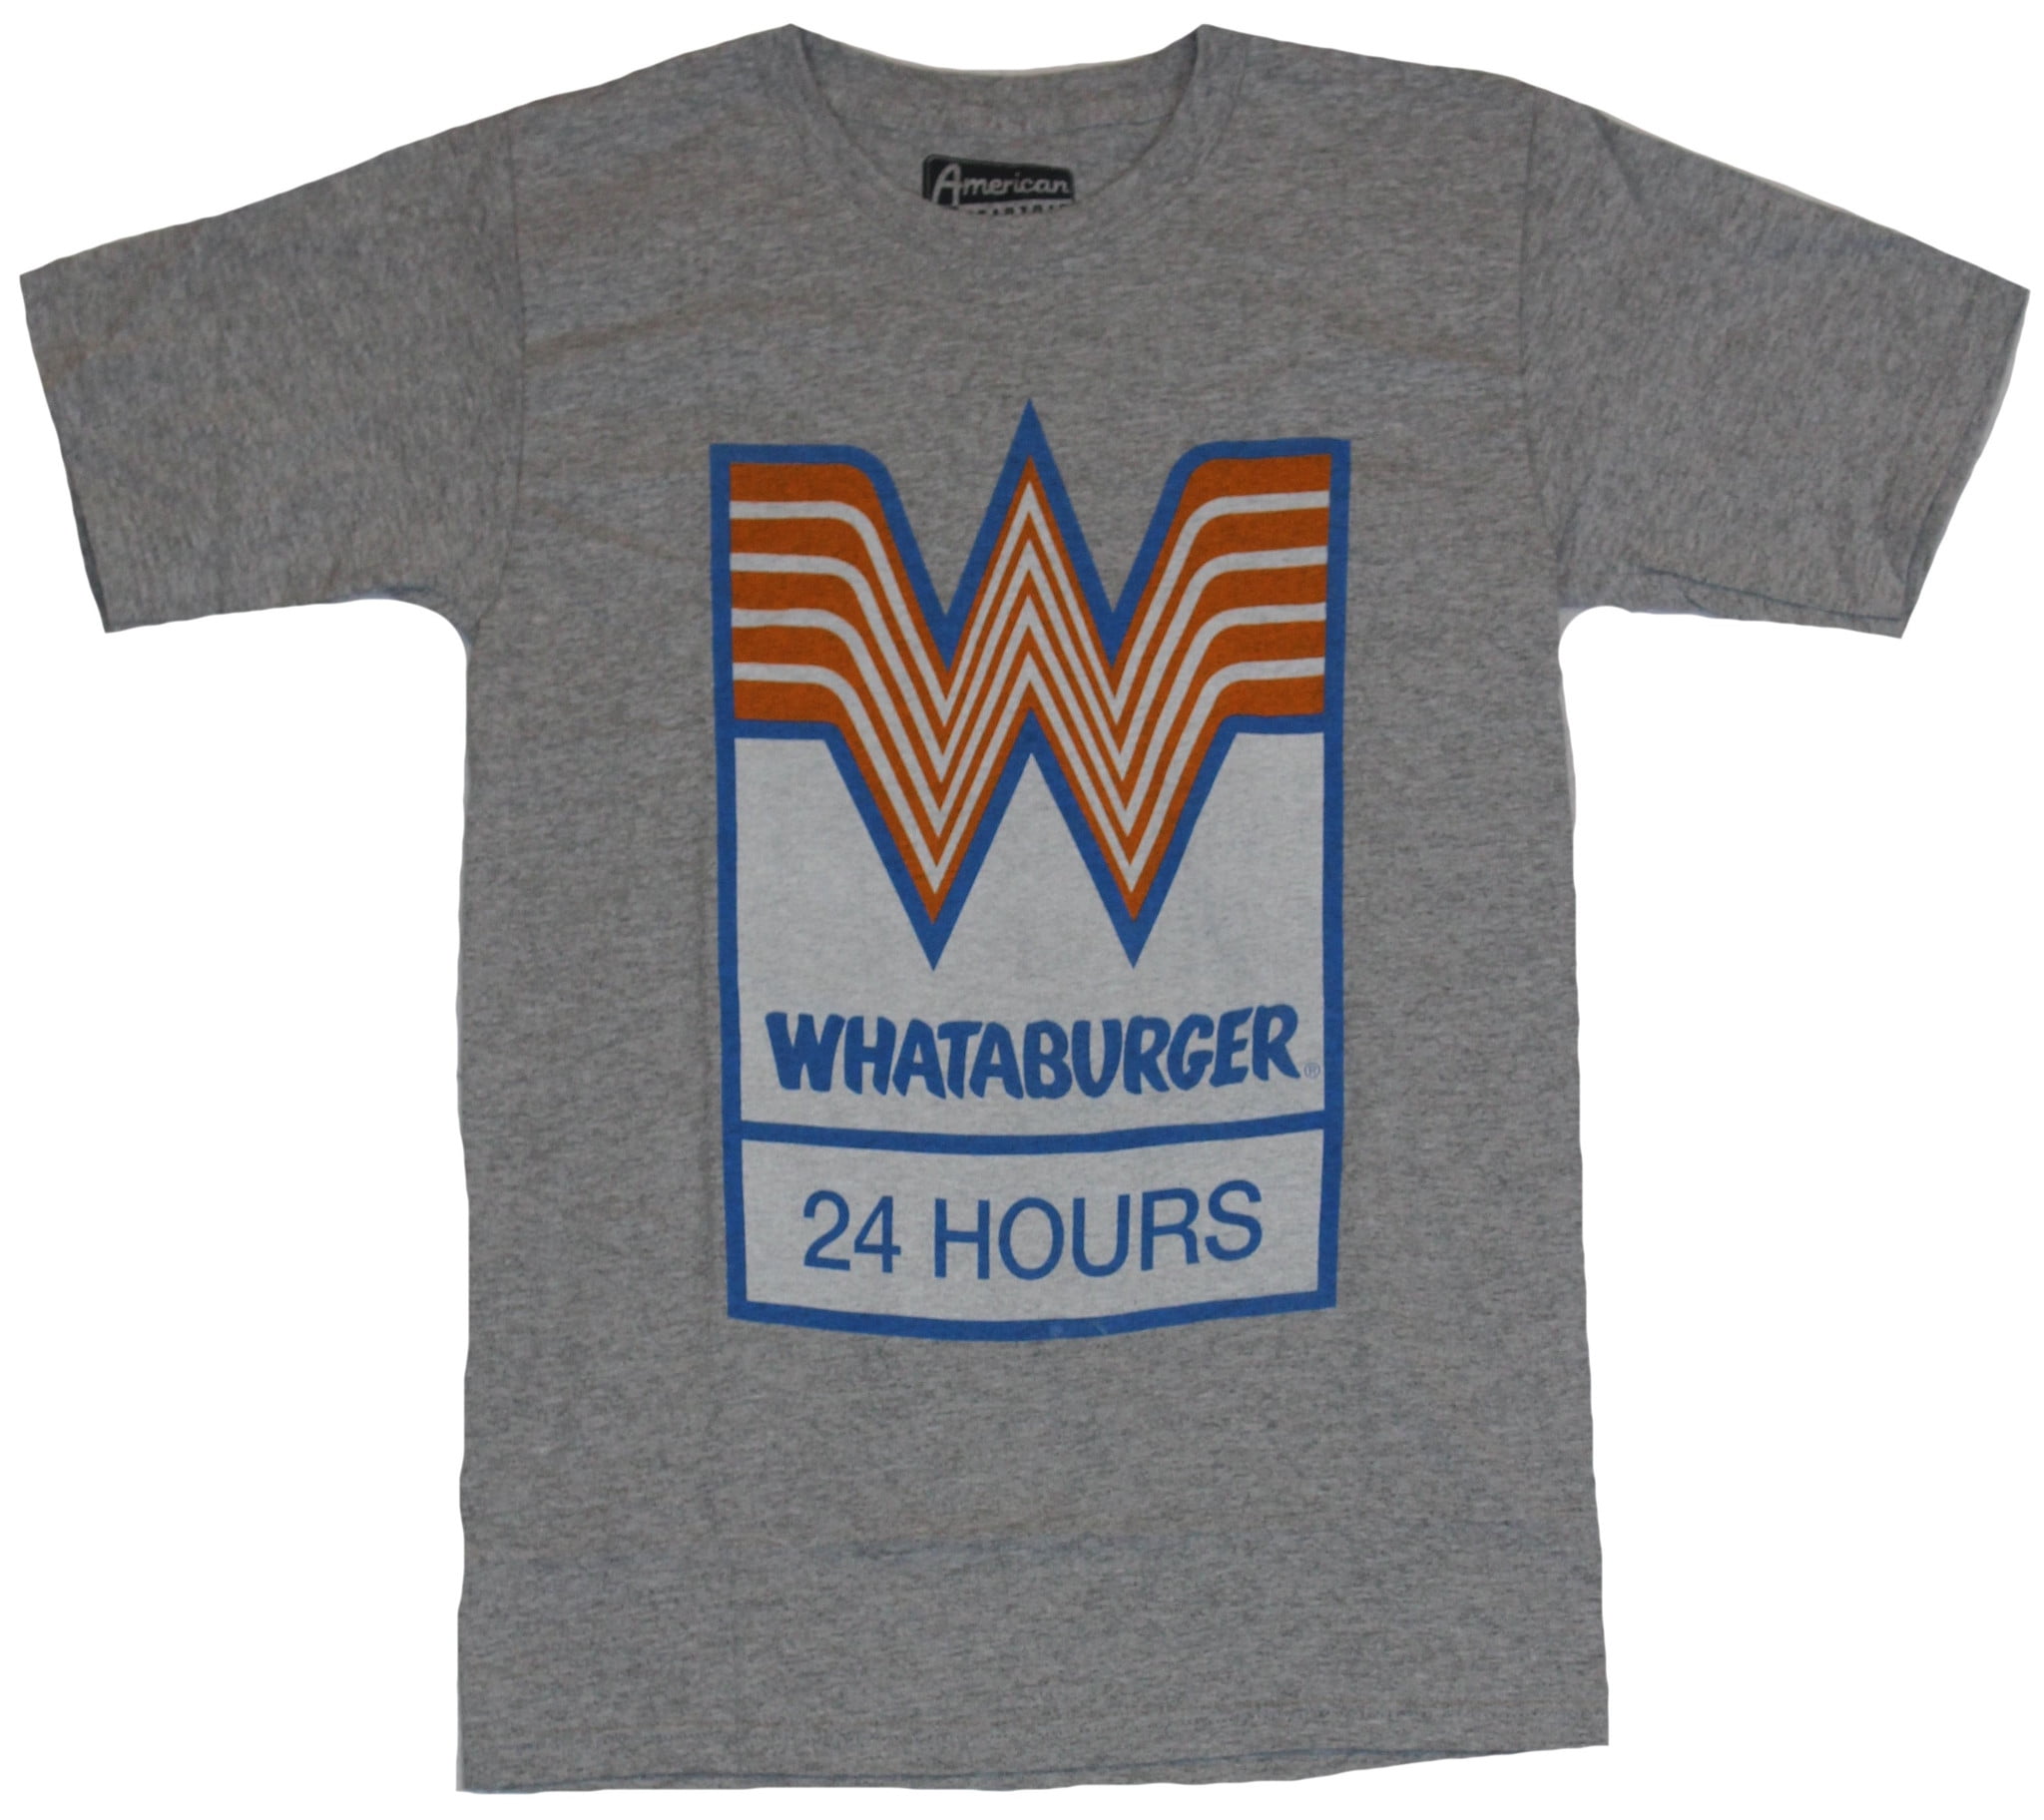 Baby Yoda Drink Whataburger Shirt Graphic T-Shirt size S-5XL Funny Gift